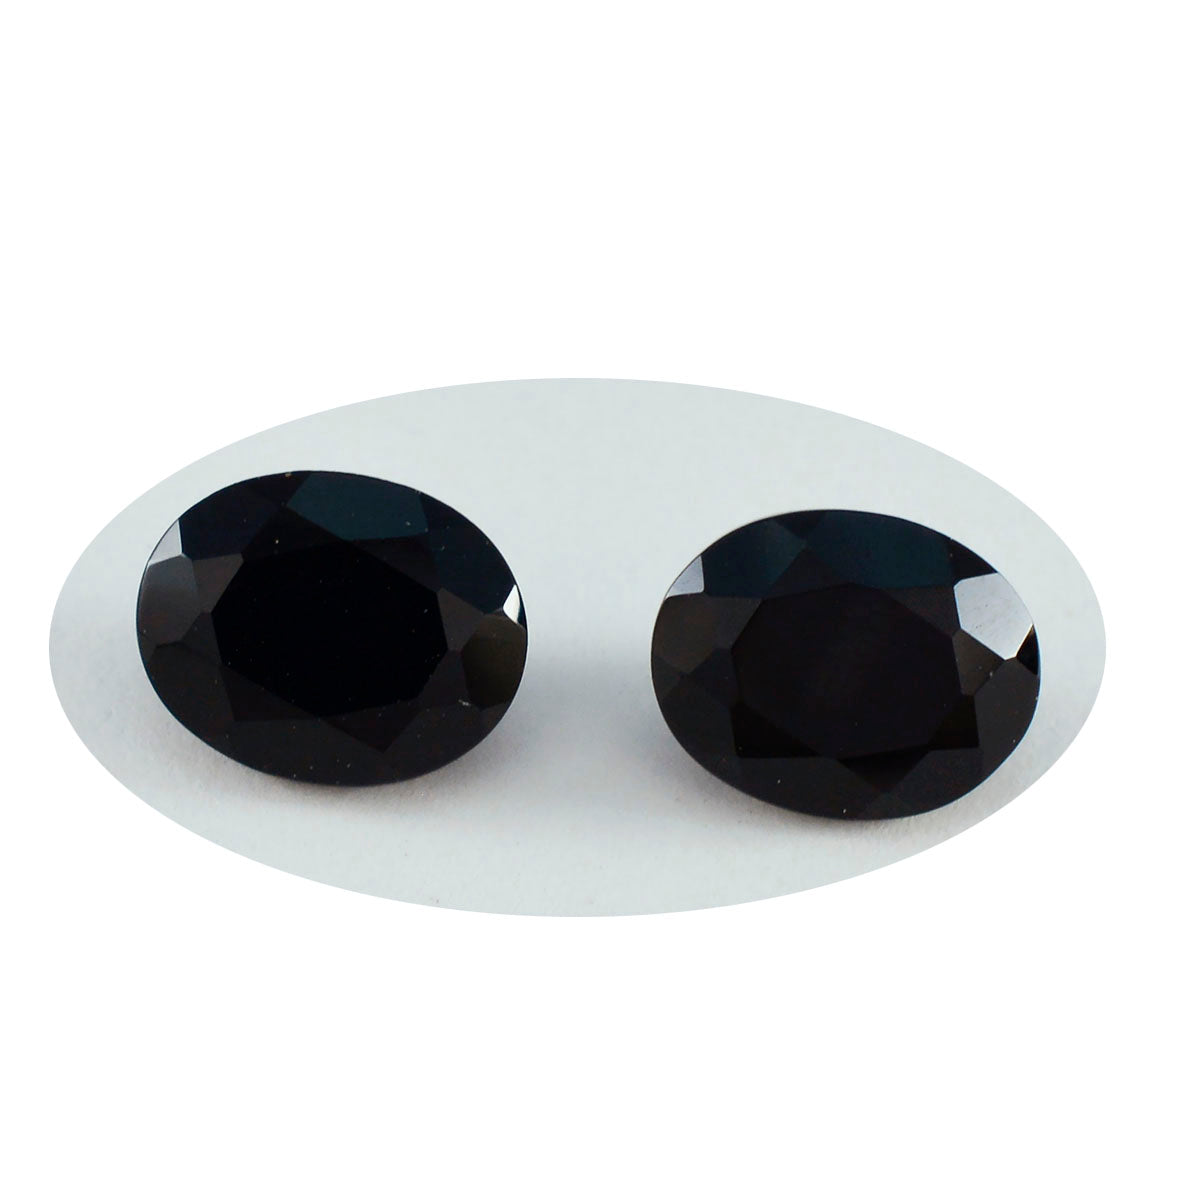 Riyogems 1PC Genuine Black Onyx Faceted 7X9 mm Oval Shape startling Quality Loose Gemstone